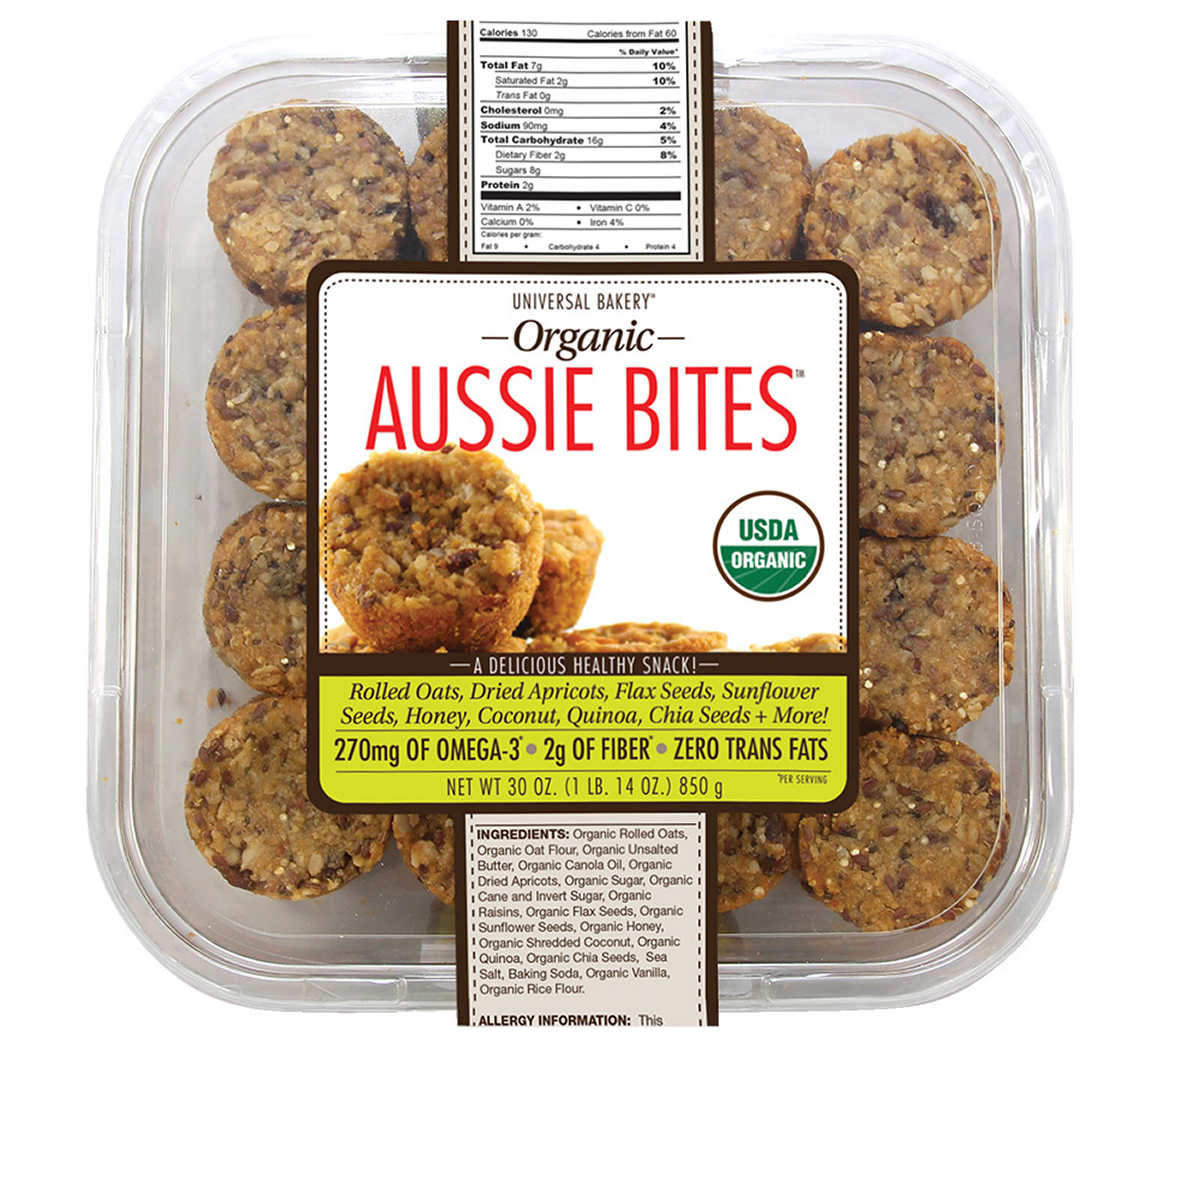 Universal Bakery Organic Aussie Bites 32 Count